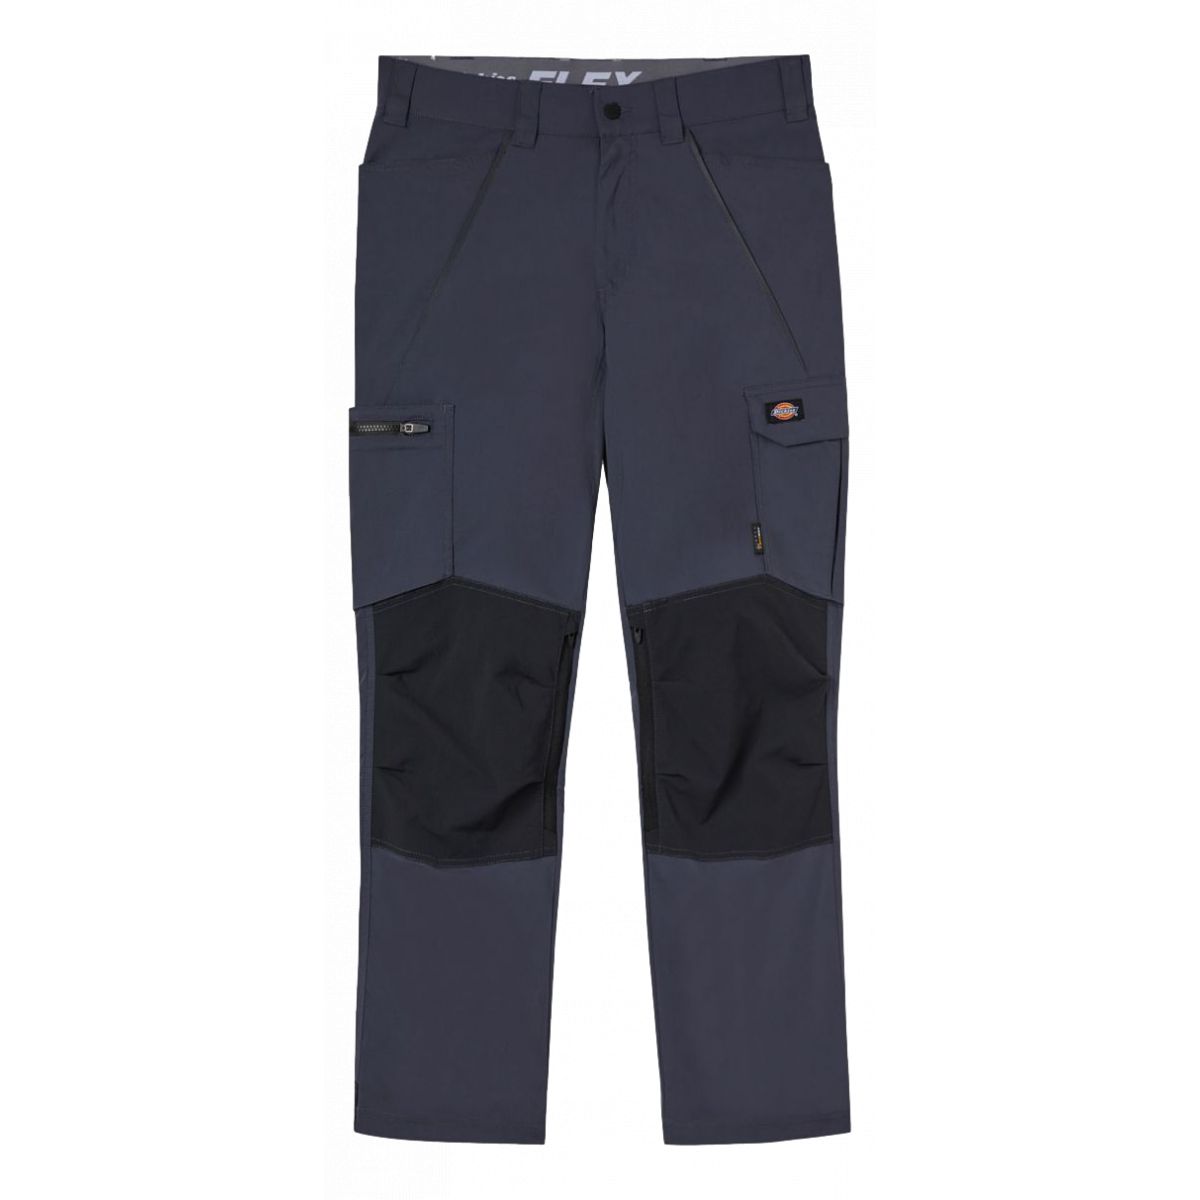 Pantalon léger Flex Gris - Dickies - Taille 48 0